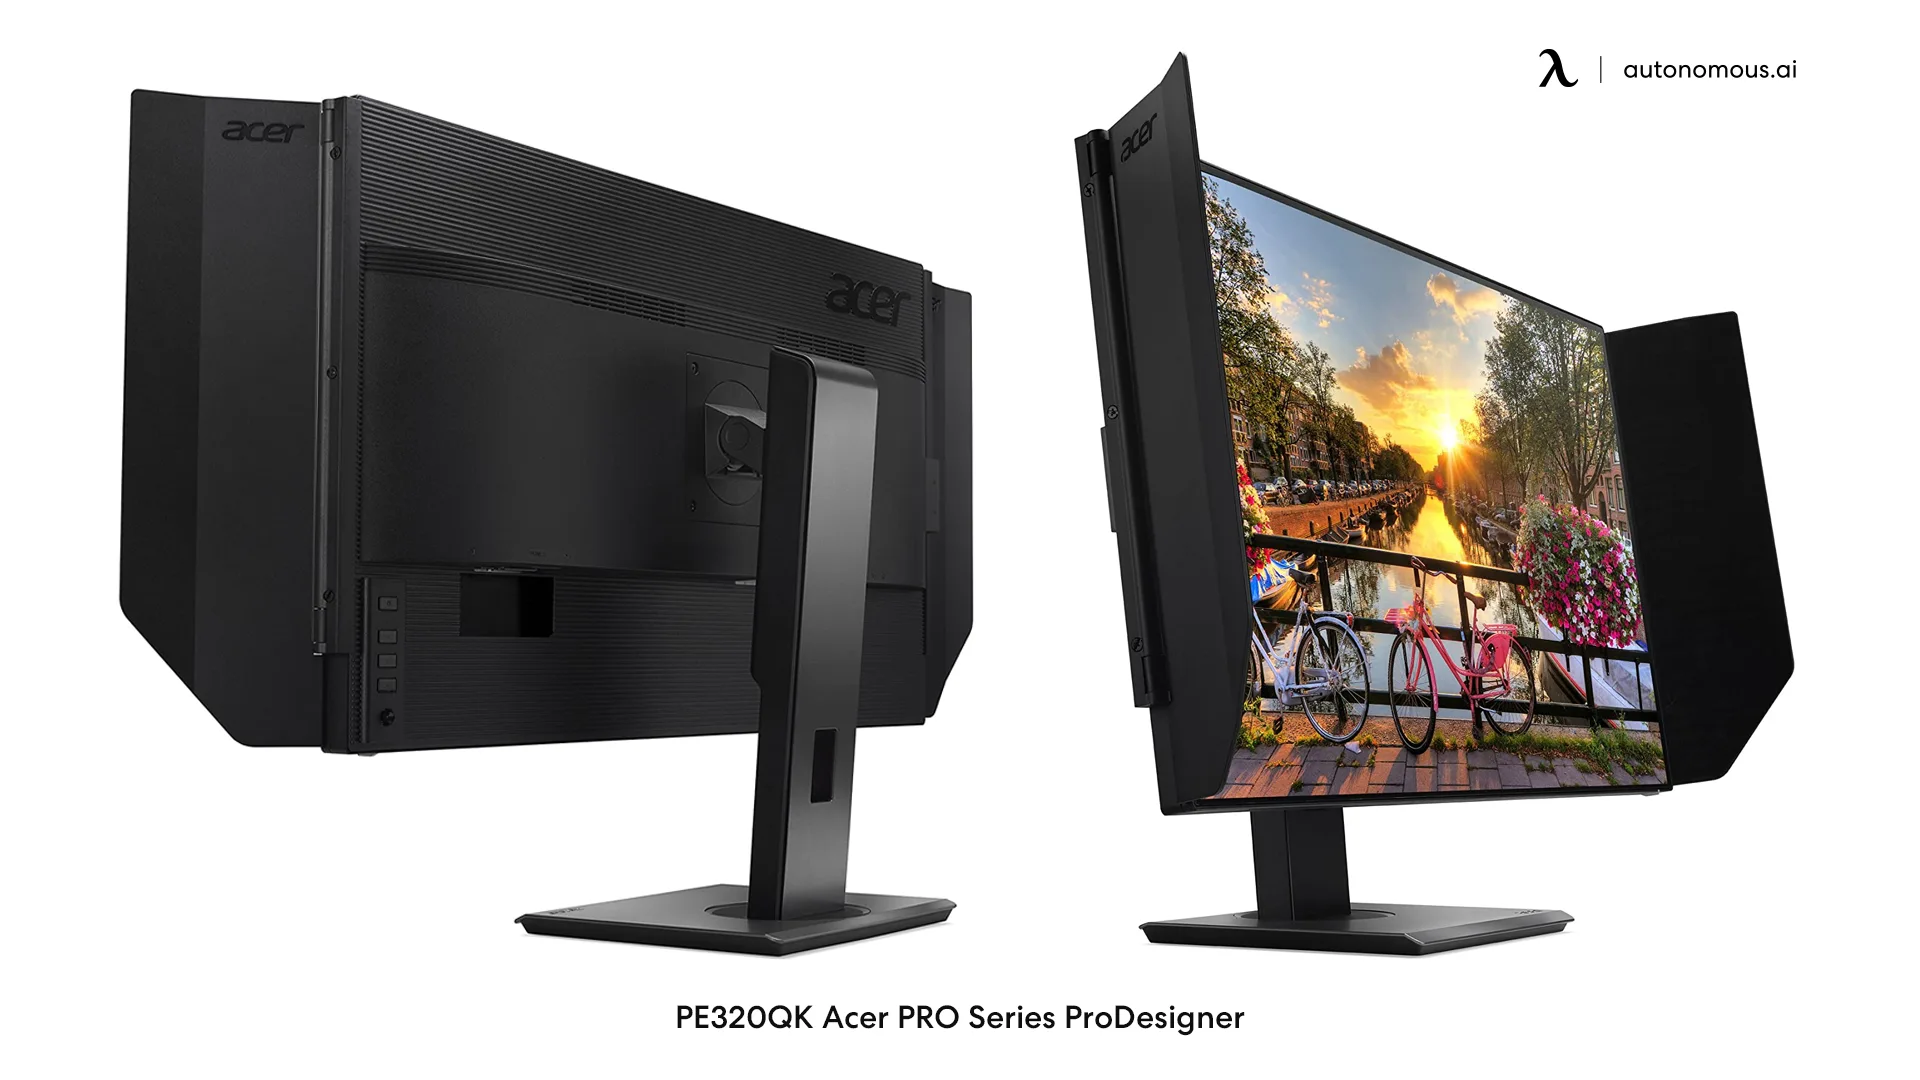 PE320QK Acer PEO Series ProDesigner